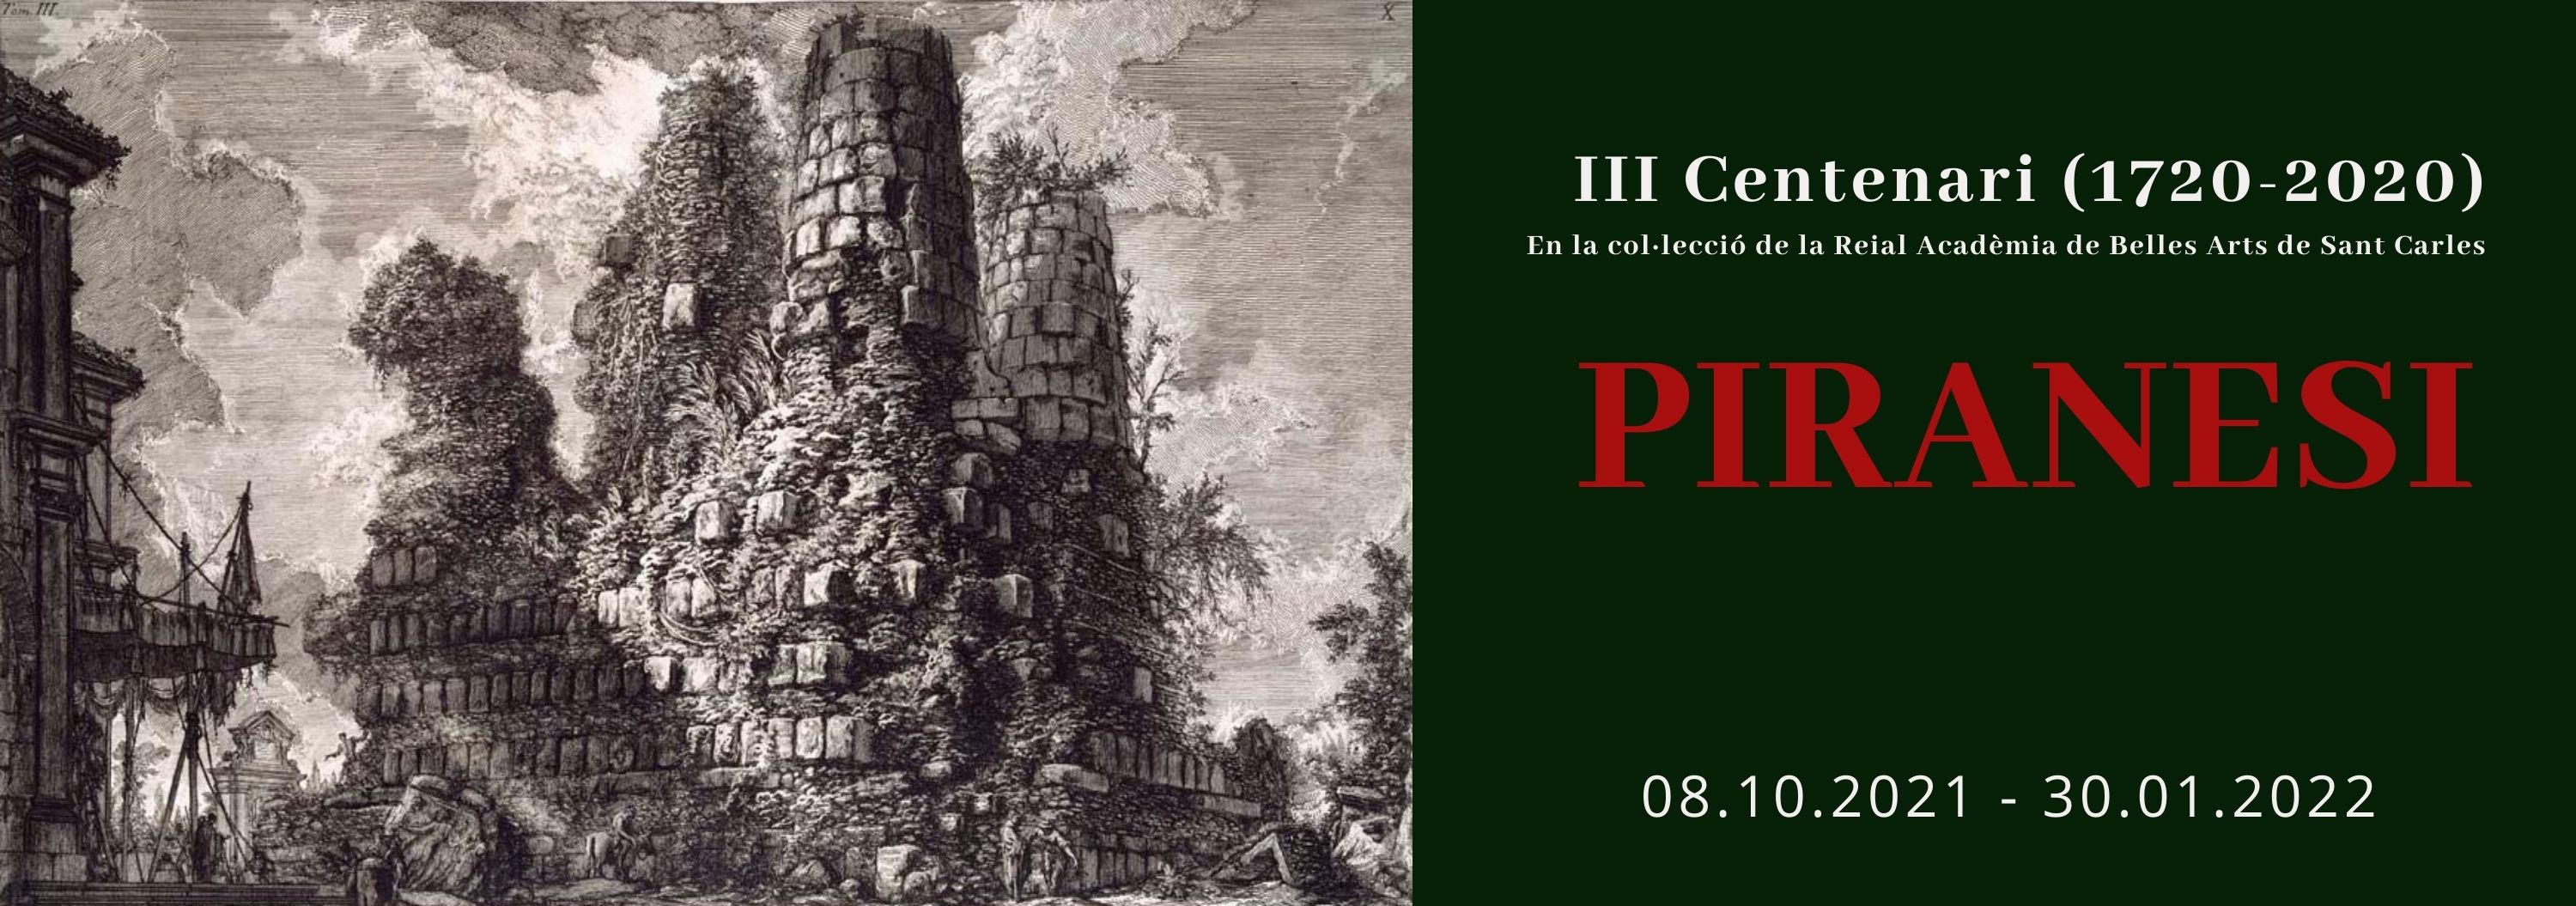 Piranesi. III Centenari (1720-2020)